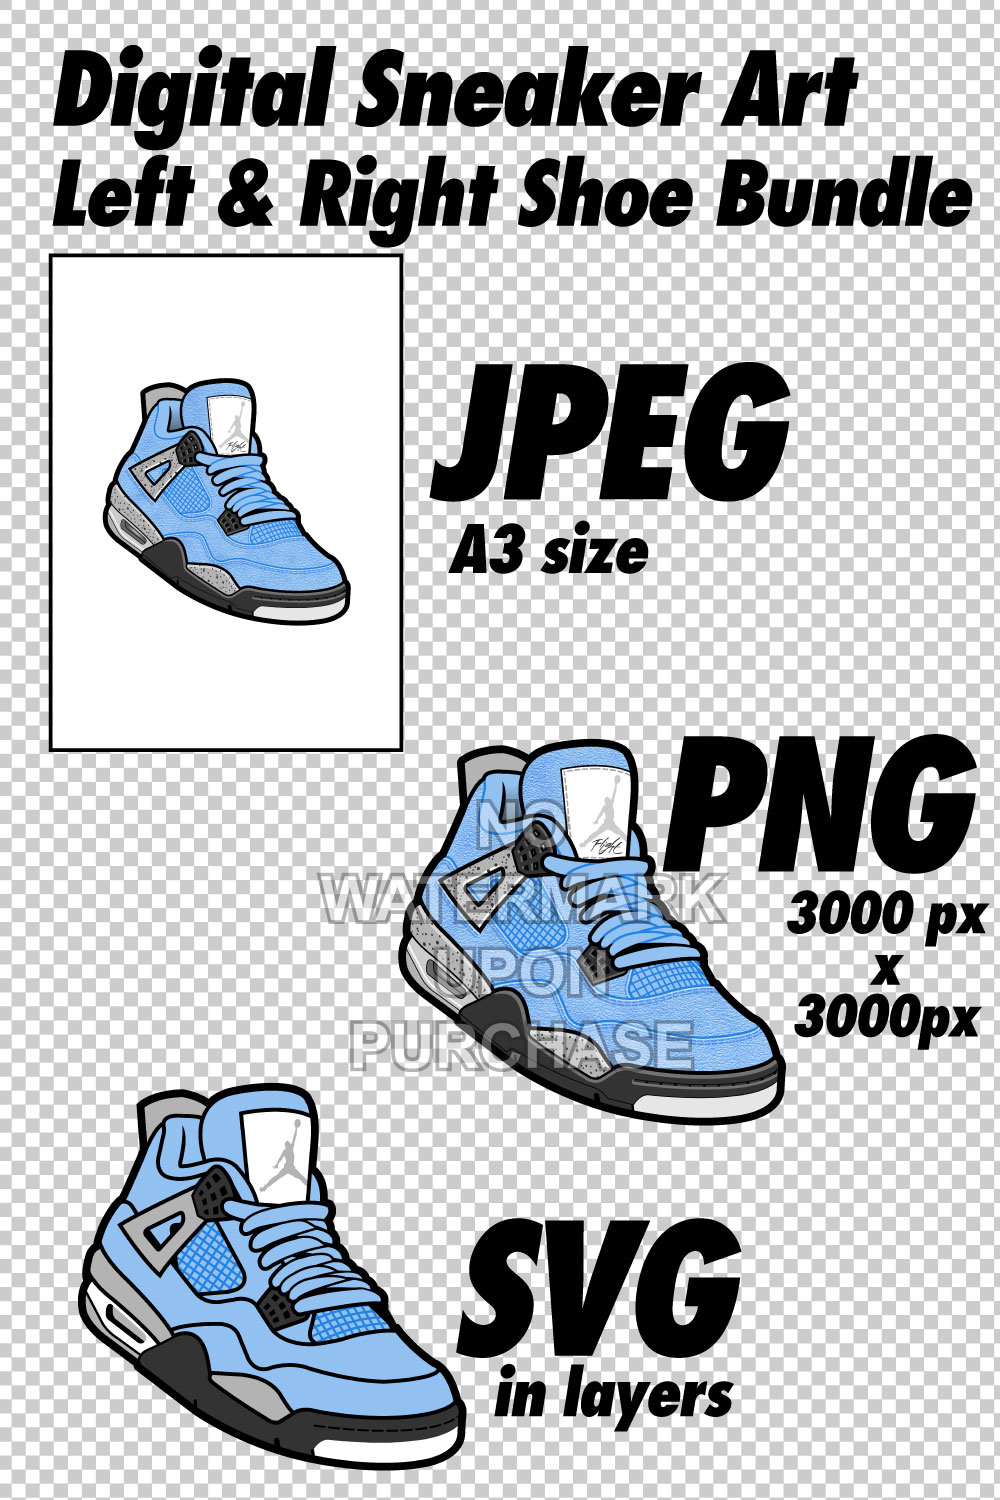 Air Jordan 4 UNC JPEG PNG SVG Sneaker Art right & left shoe bundle Digital Download pinterest preview image.